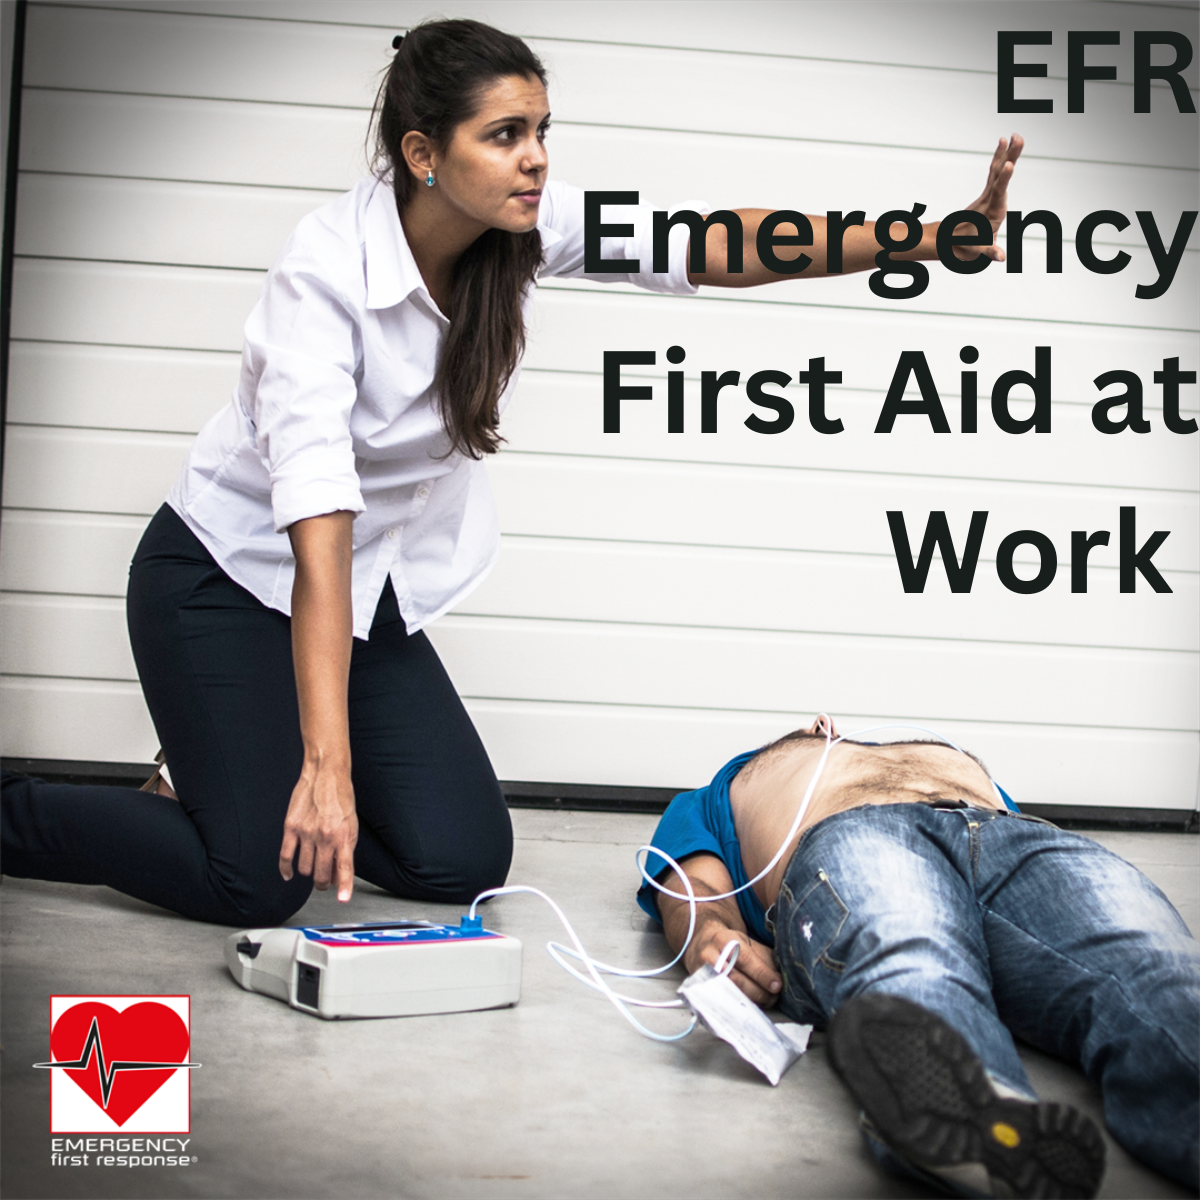 EFR EMERGENCY FIRST AID AT WORK